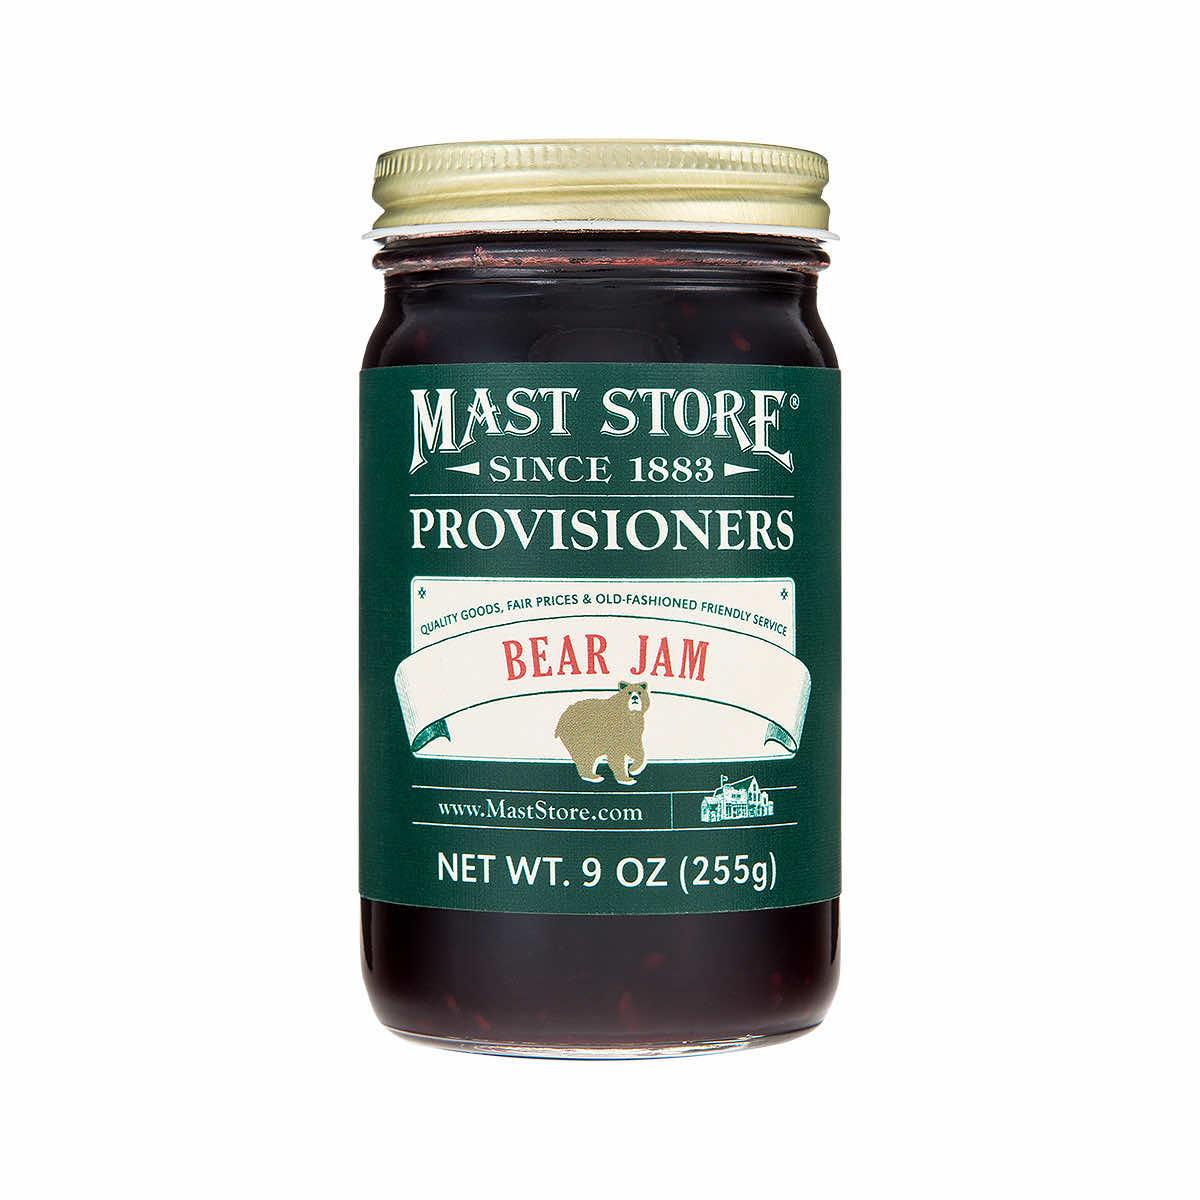  Mast Store Provisioners Bear Jam